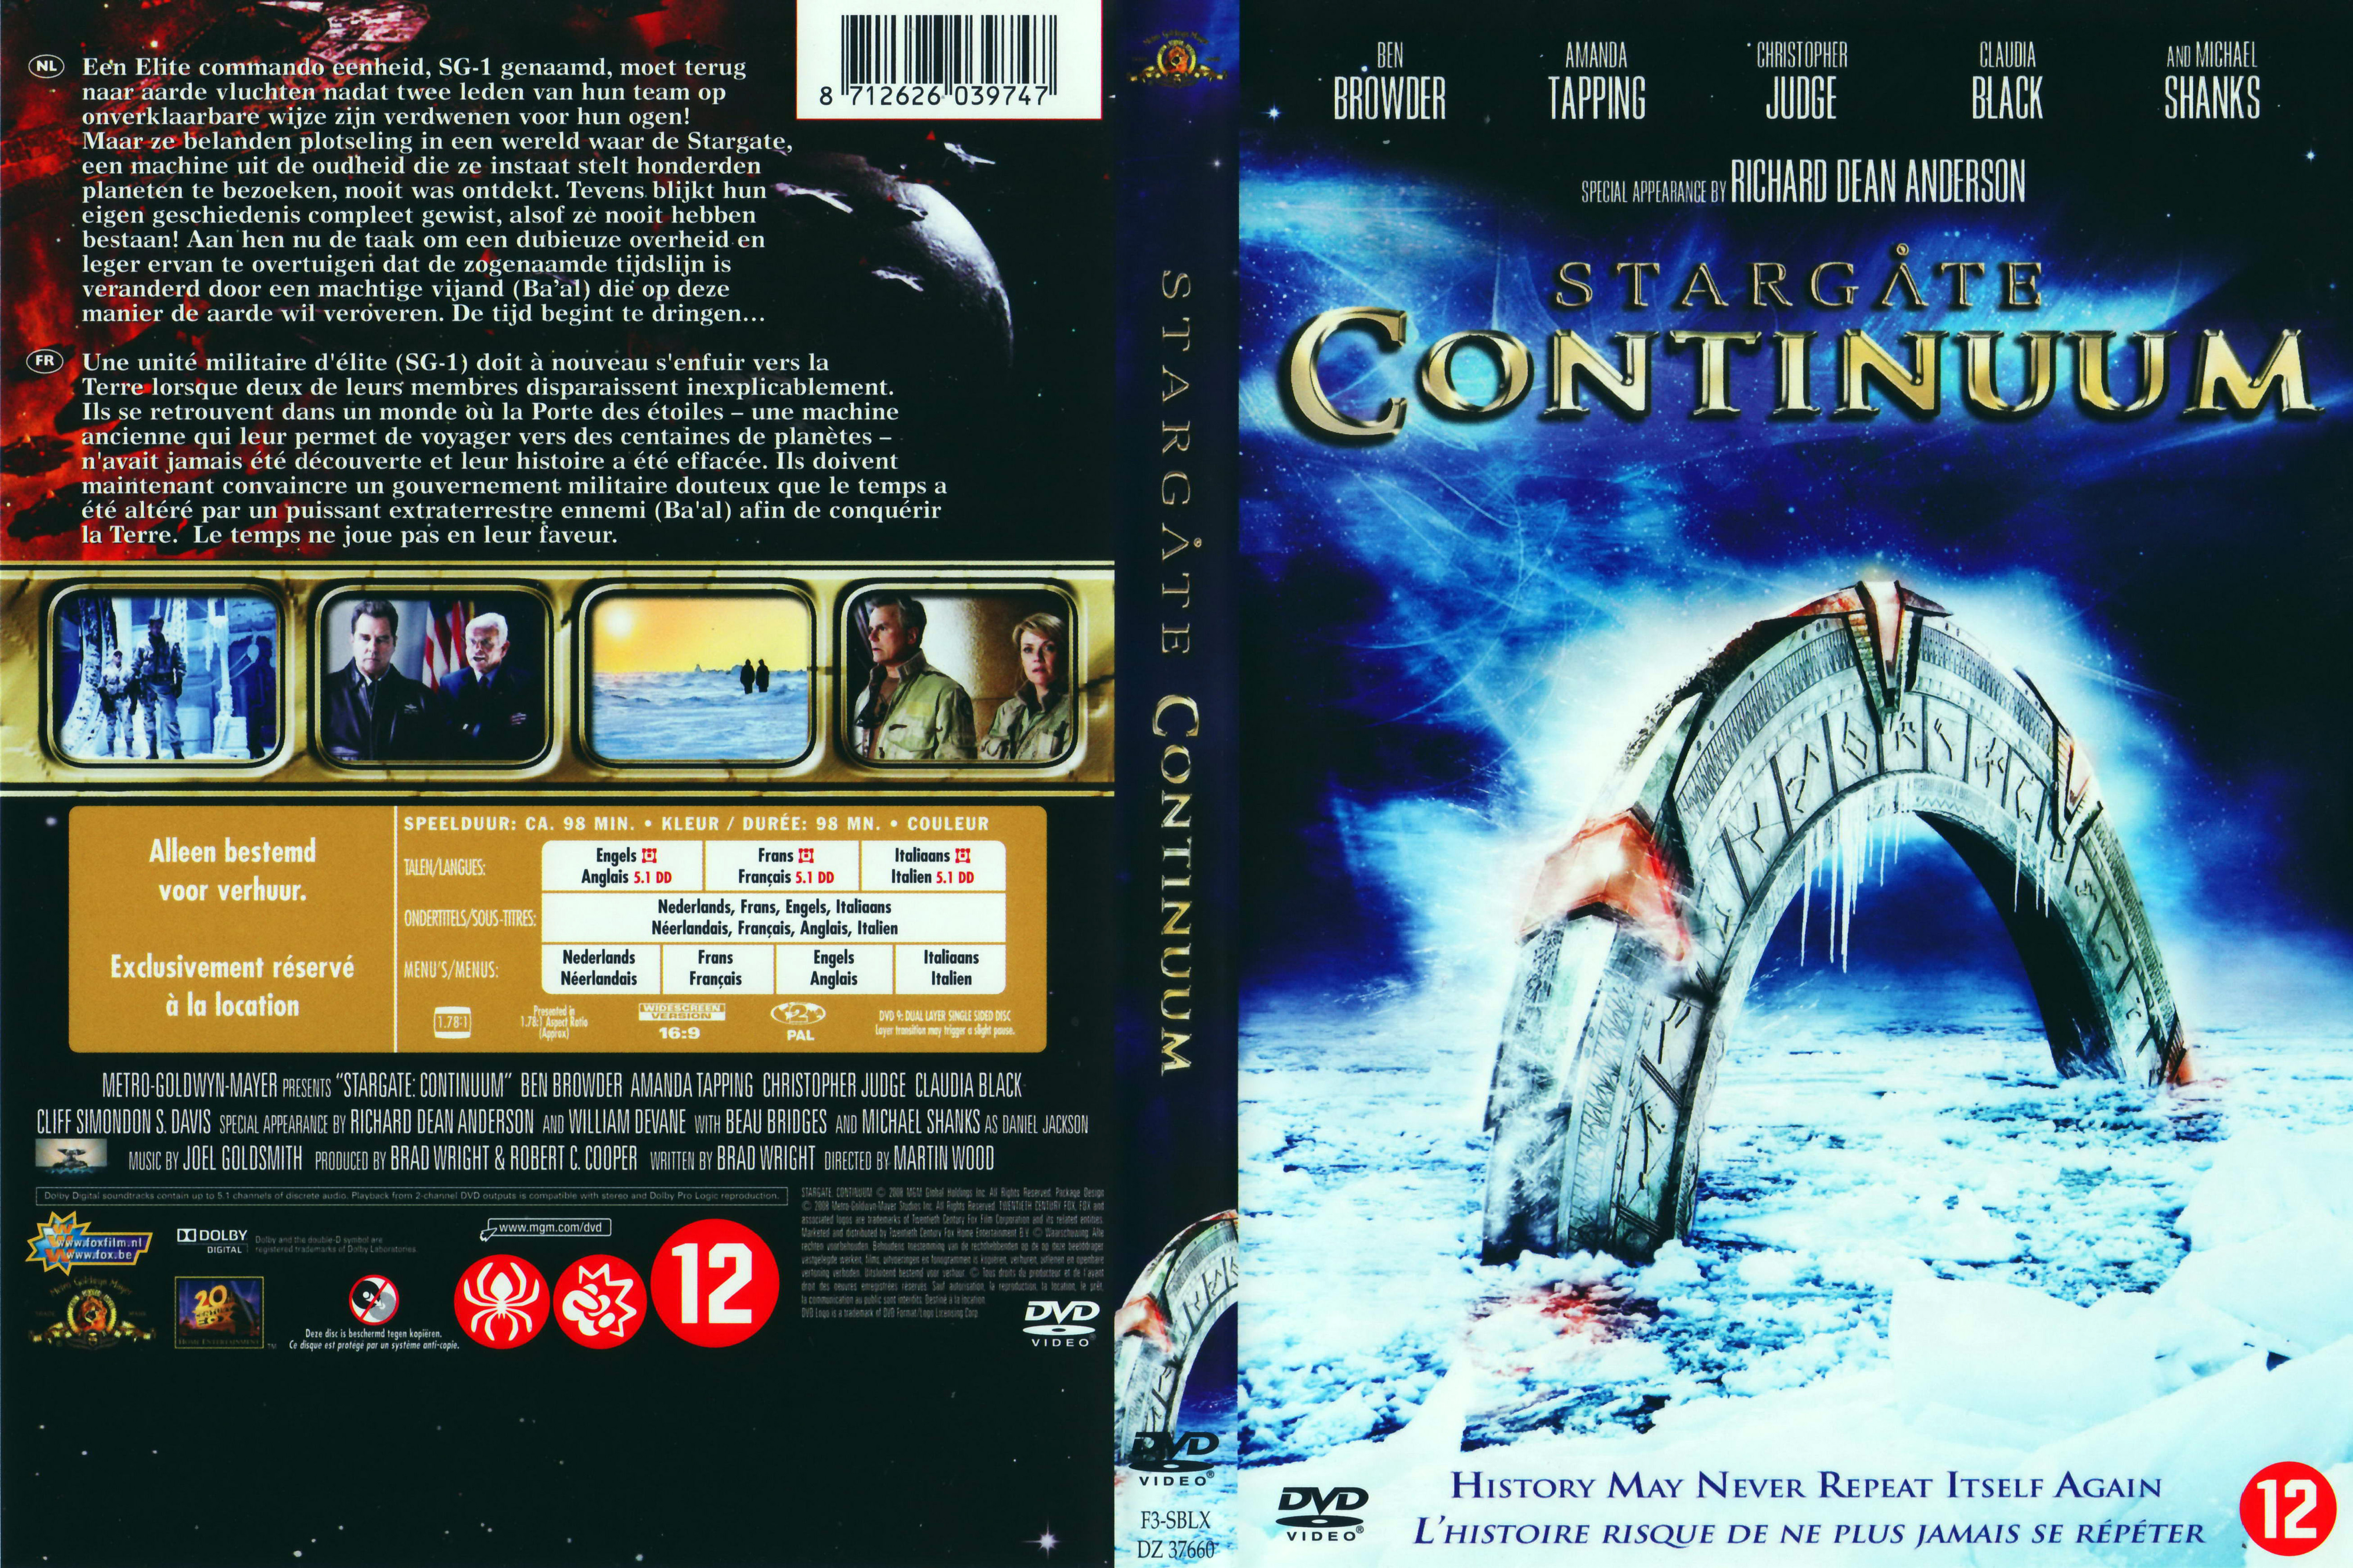 Jaquette DVD Stargate continuum v2